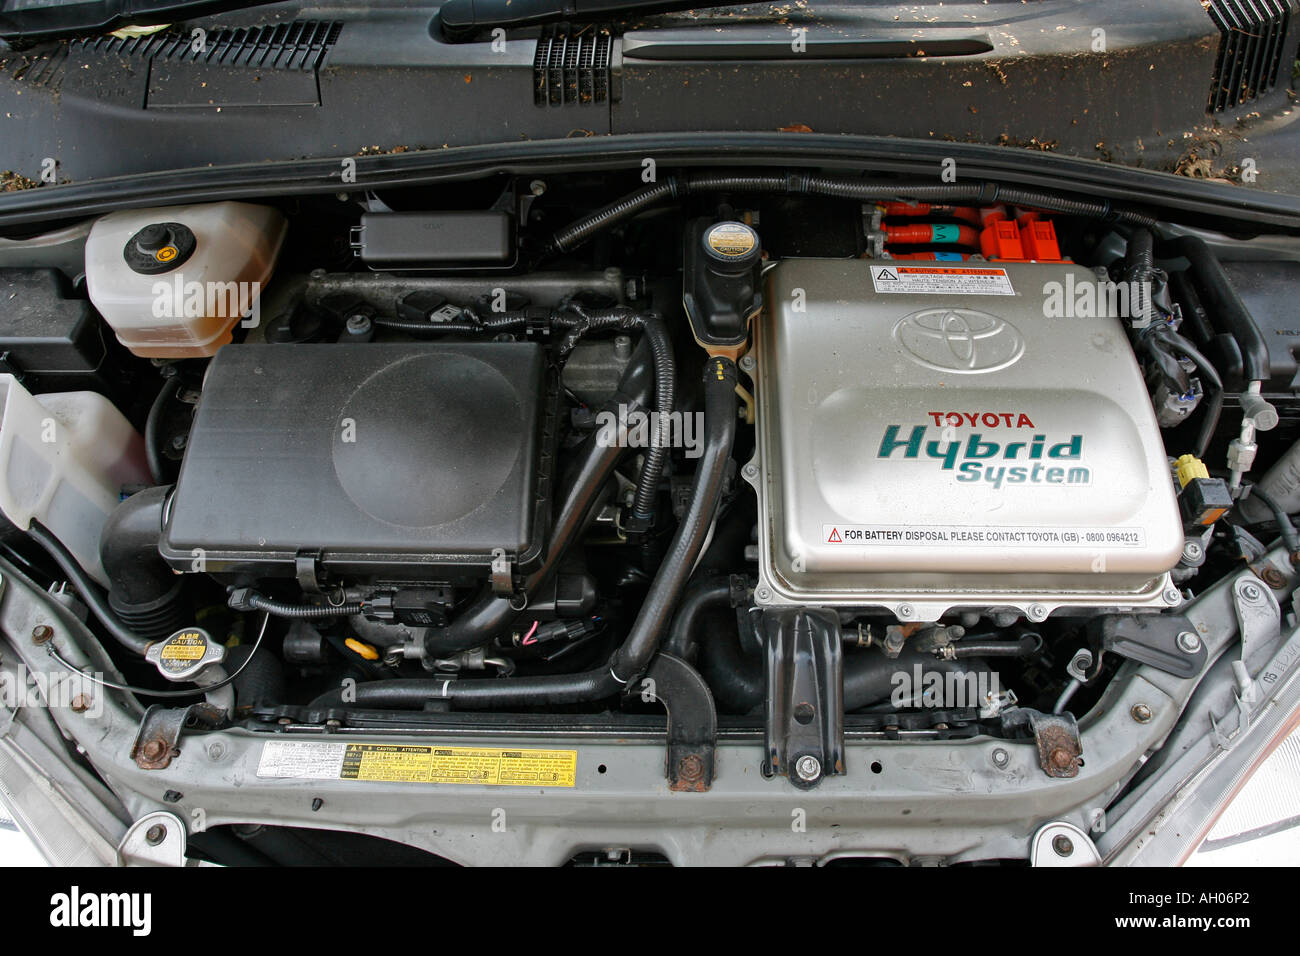 Engine of a Toyota Prius petrol electric hybrid car Stock Photo